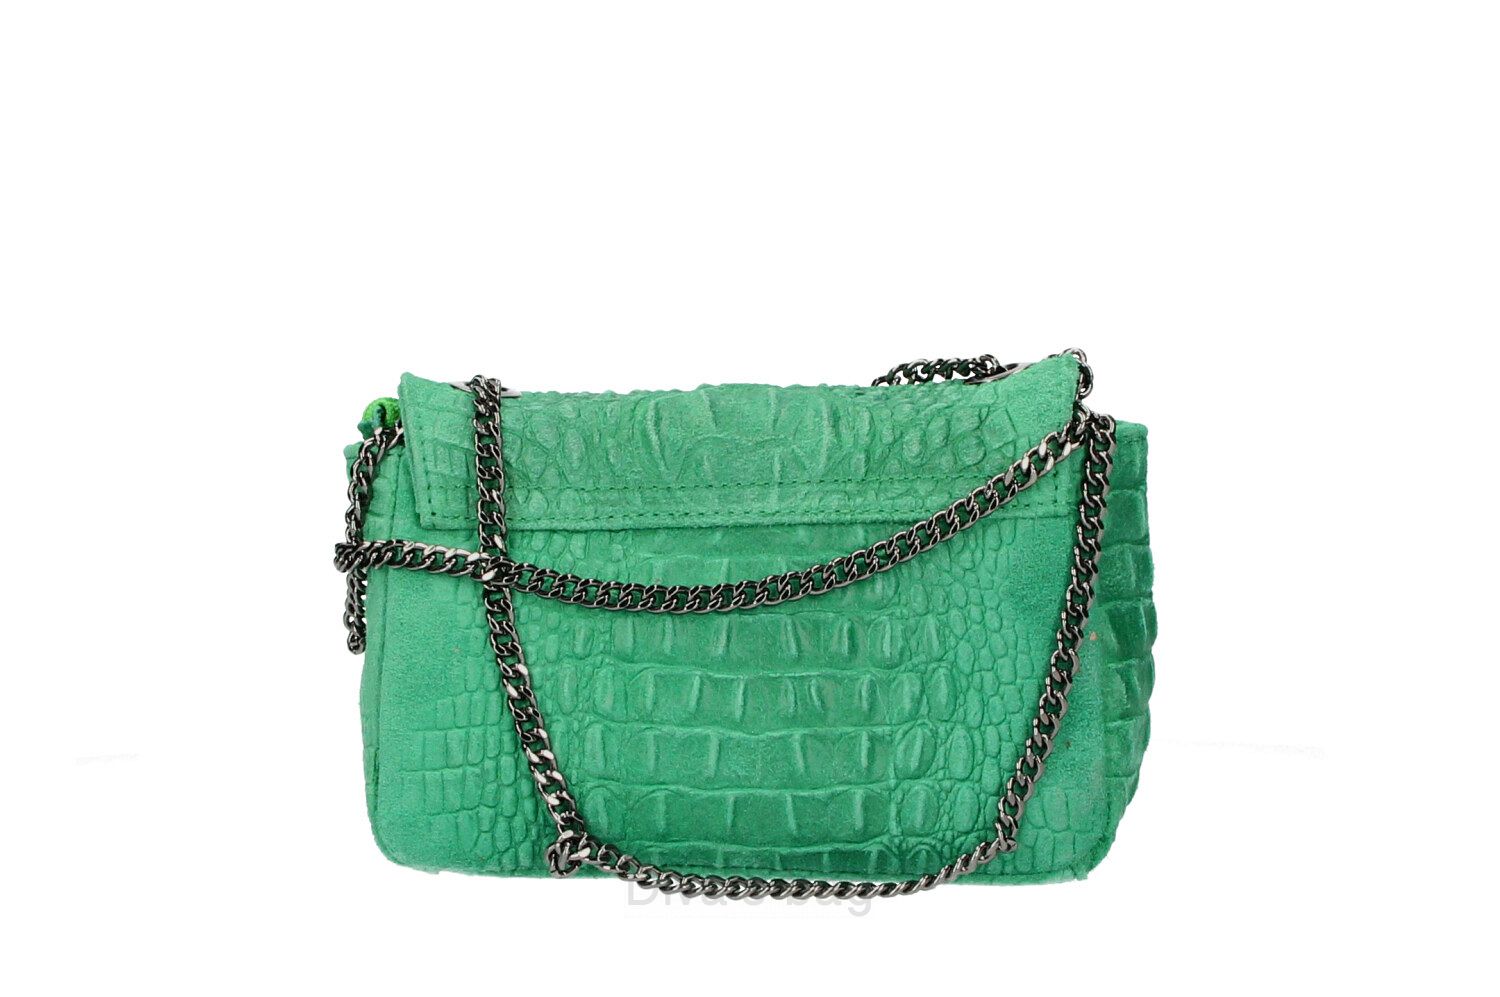 Miranda - Genuine Leather Handbag